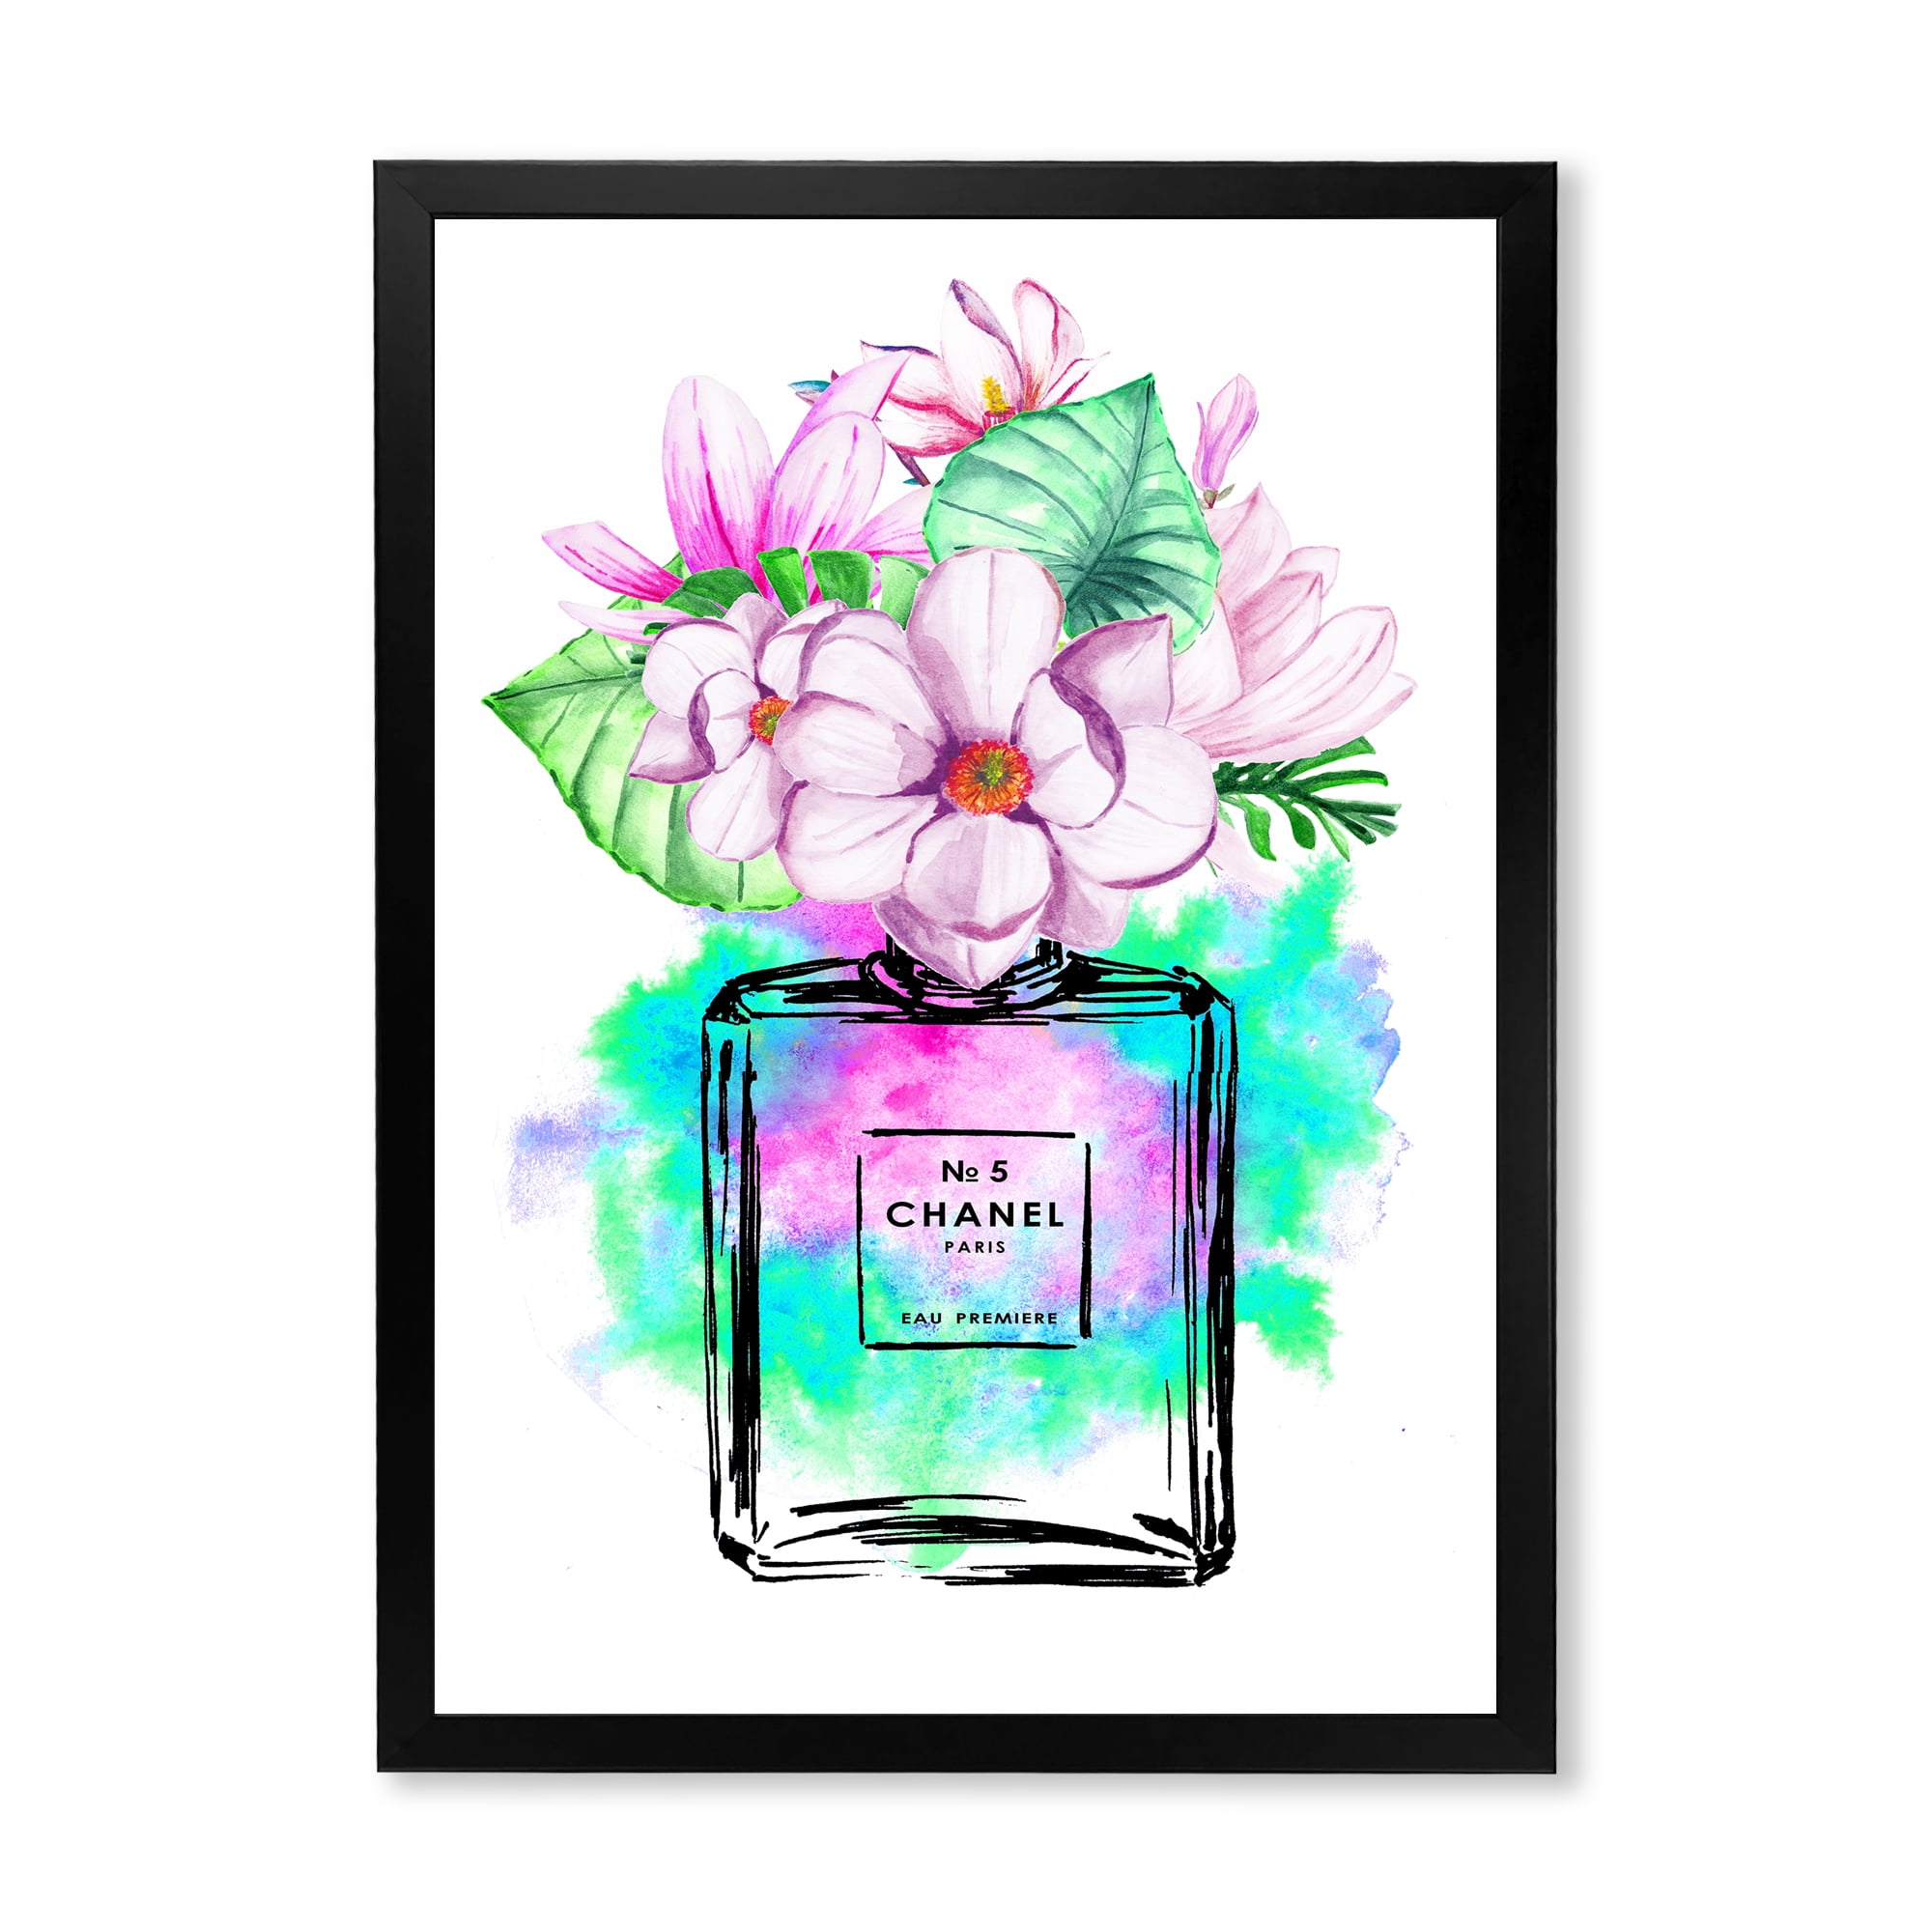 Framed Canvas Art (White Floating Frame) - Gems Fashion Books and Perfume by Pomaikai Barron ( Fashion > Fendi art) - 26x18 in